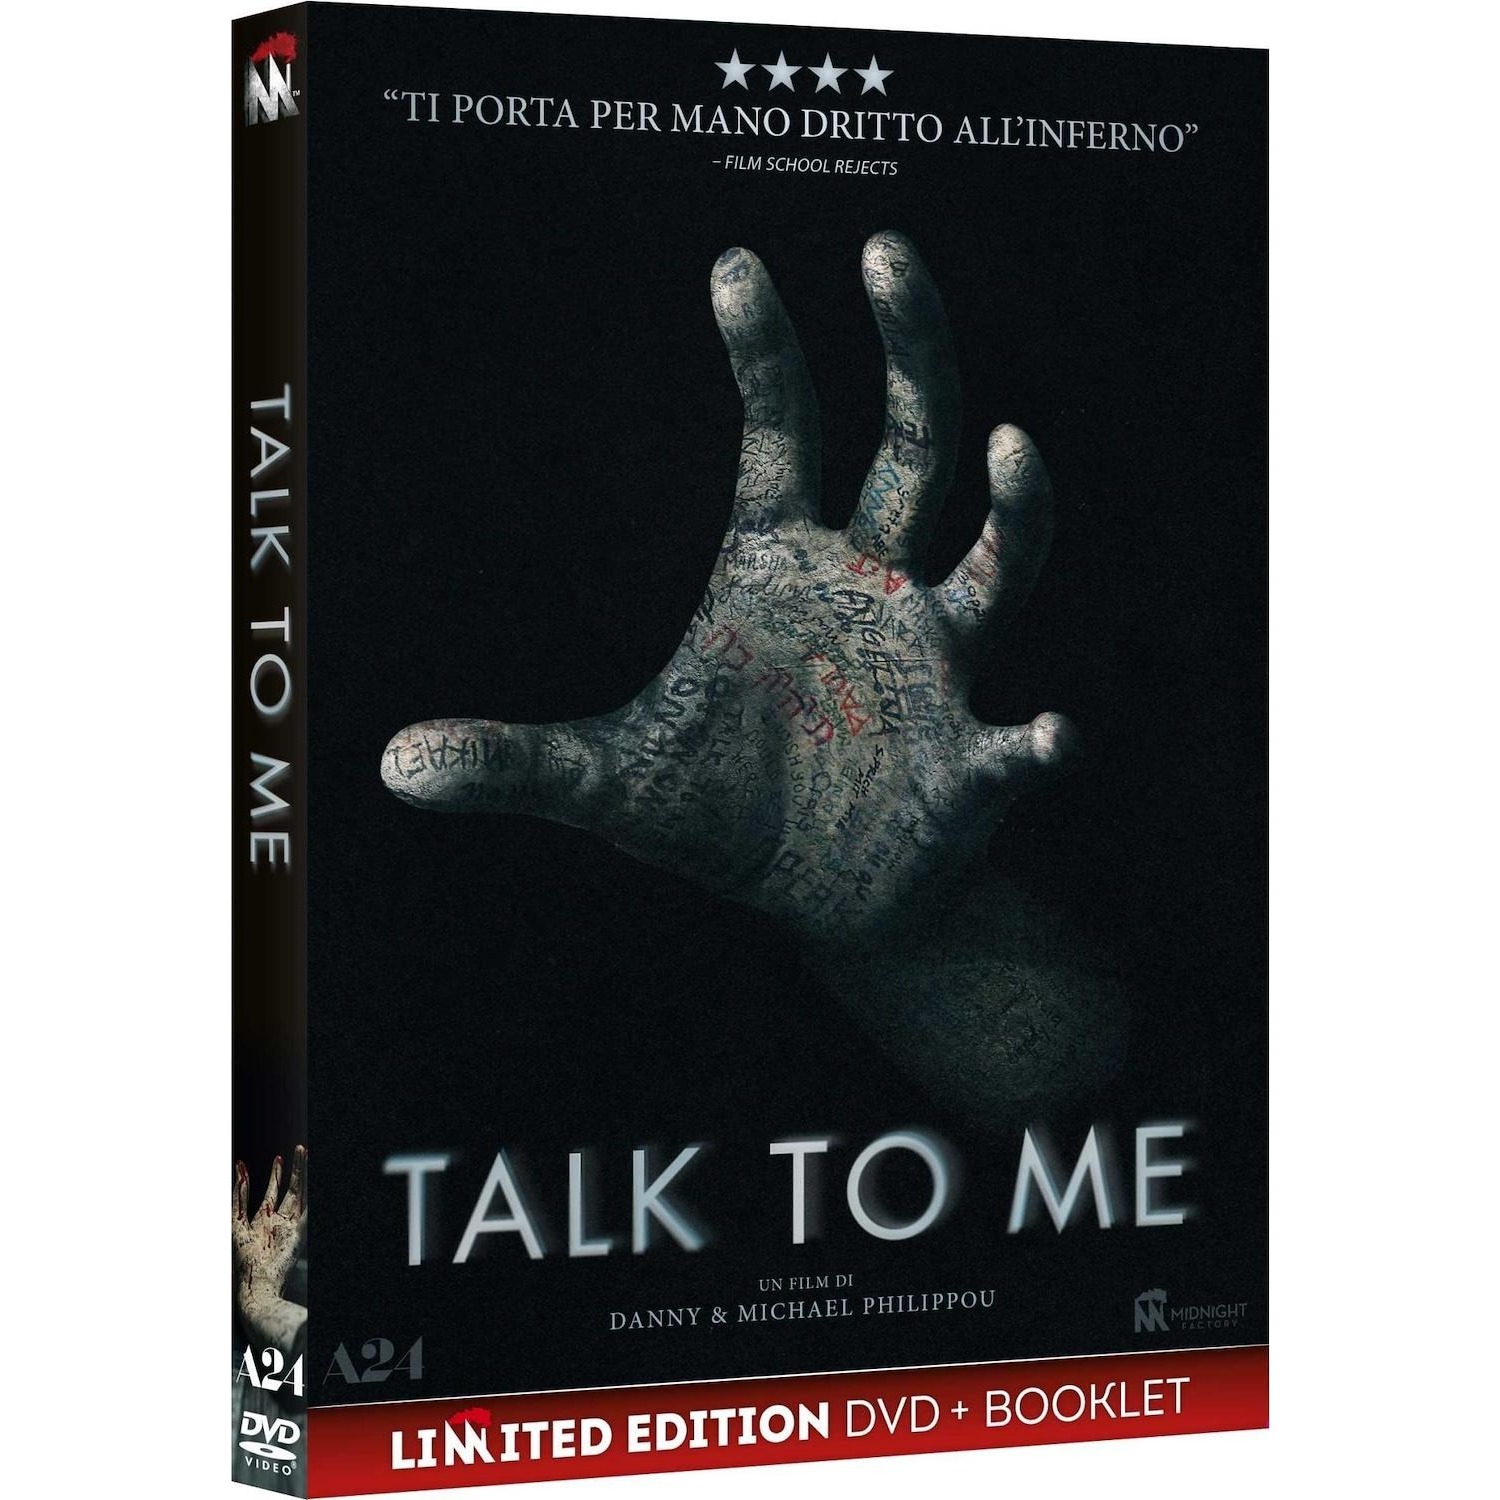 Immagine per DVD Talk to me da DIMOStore